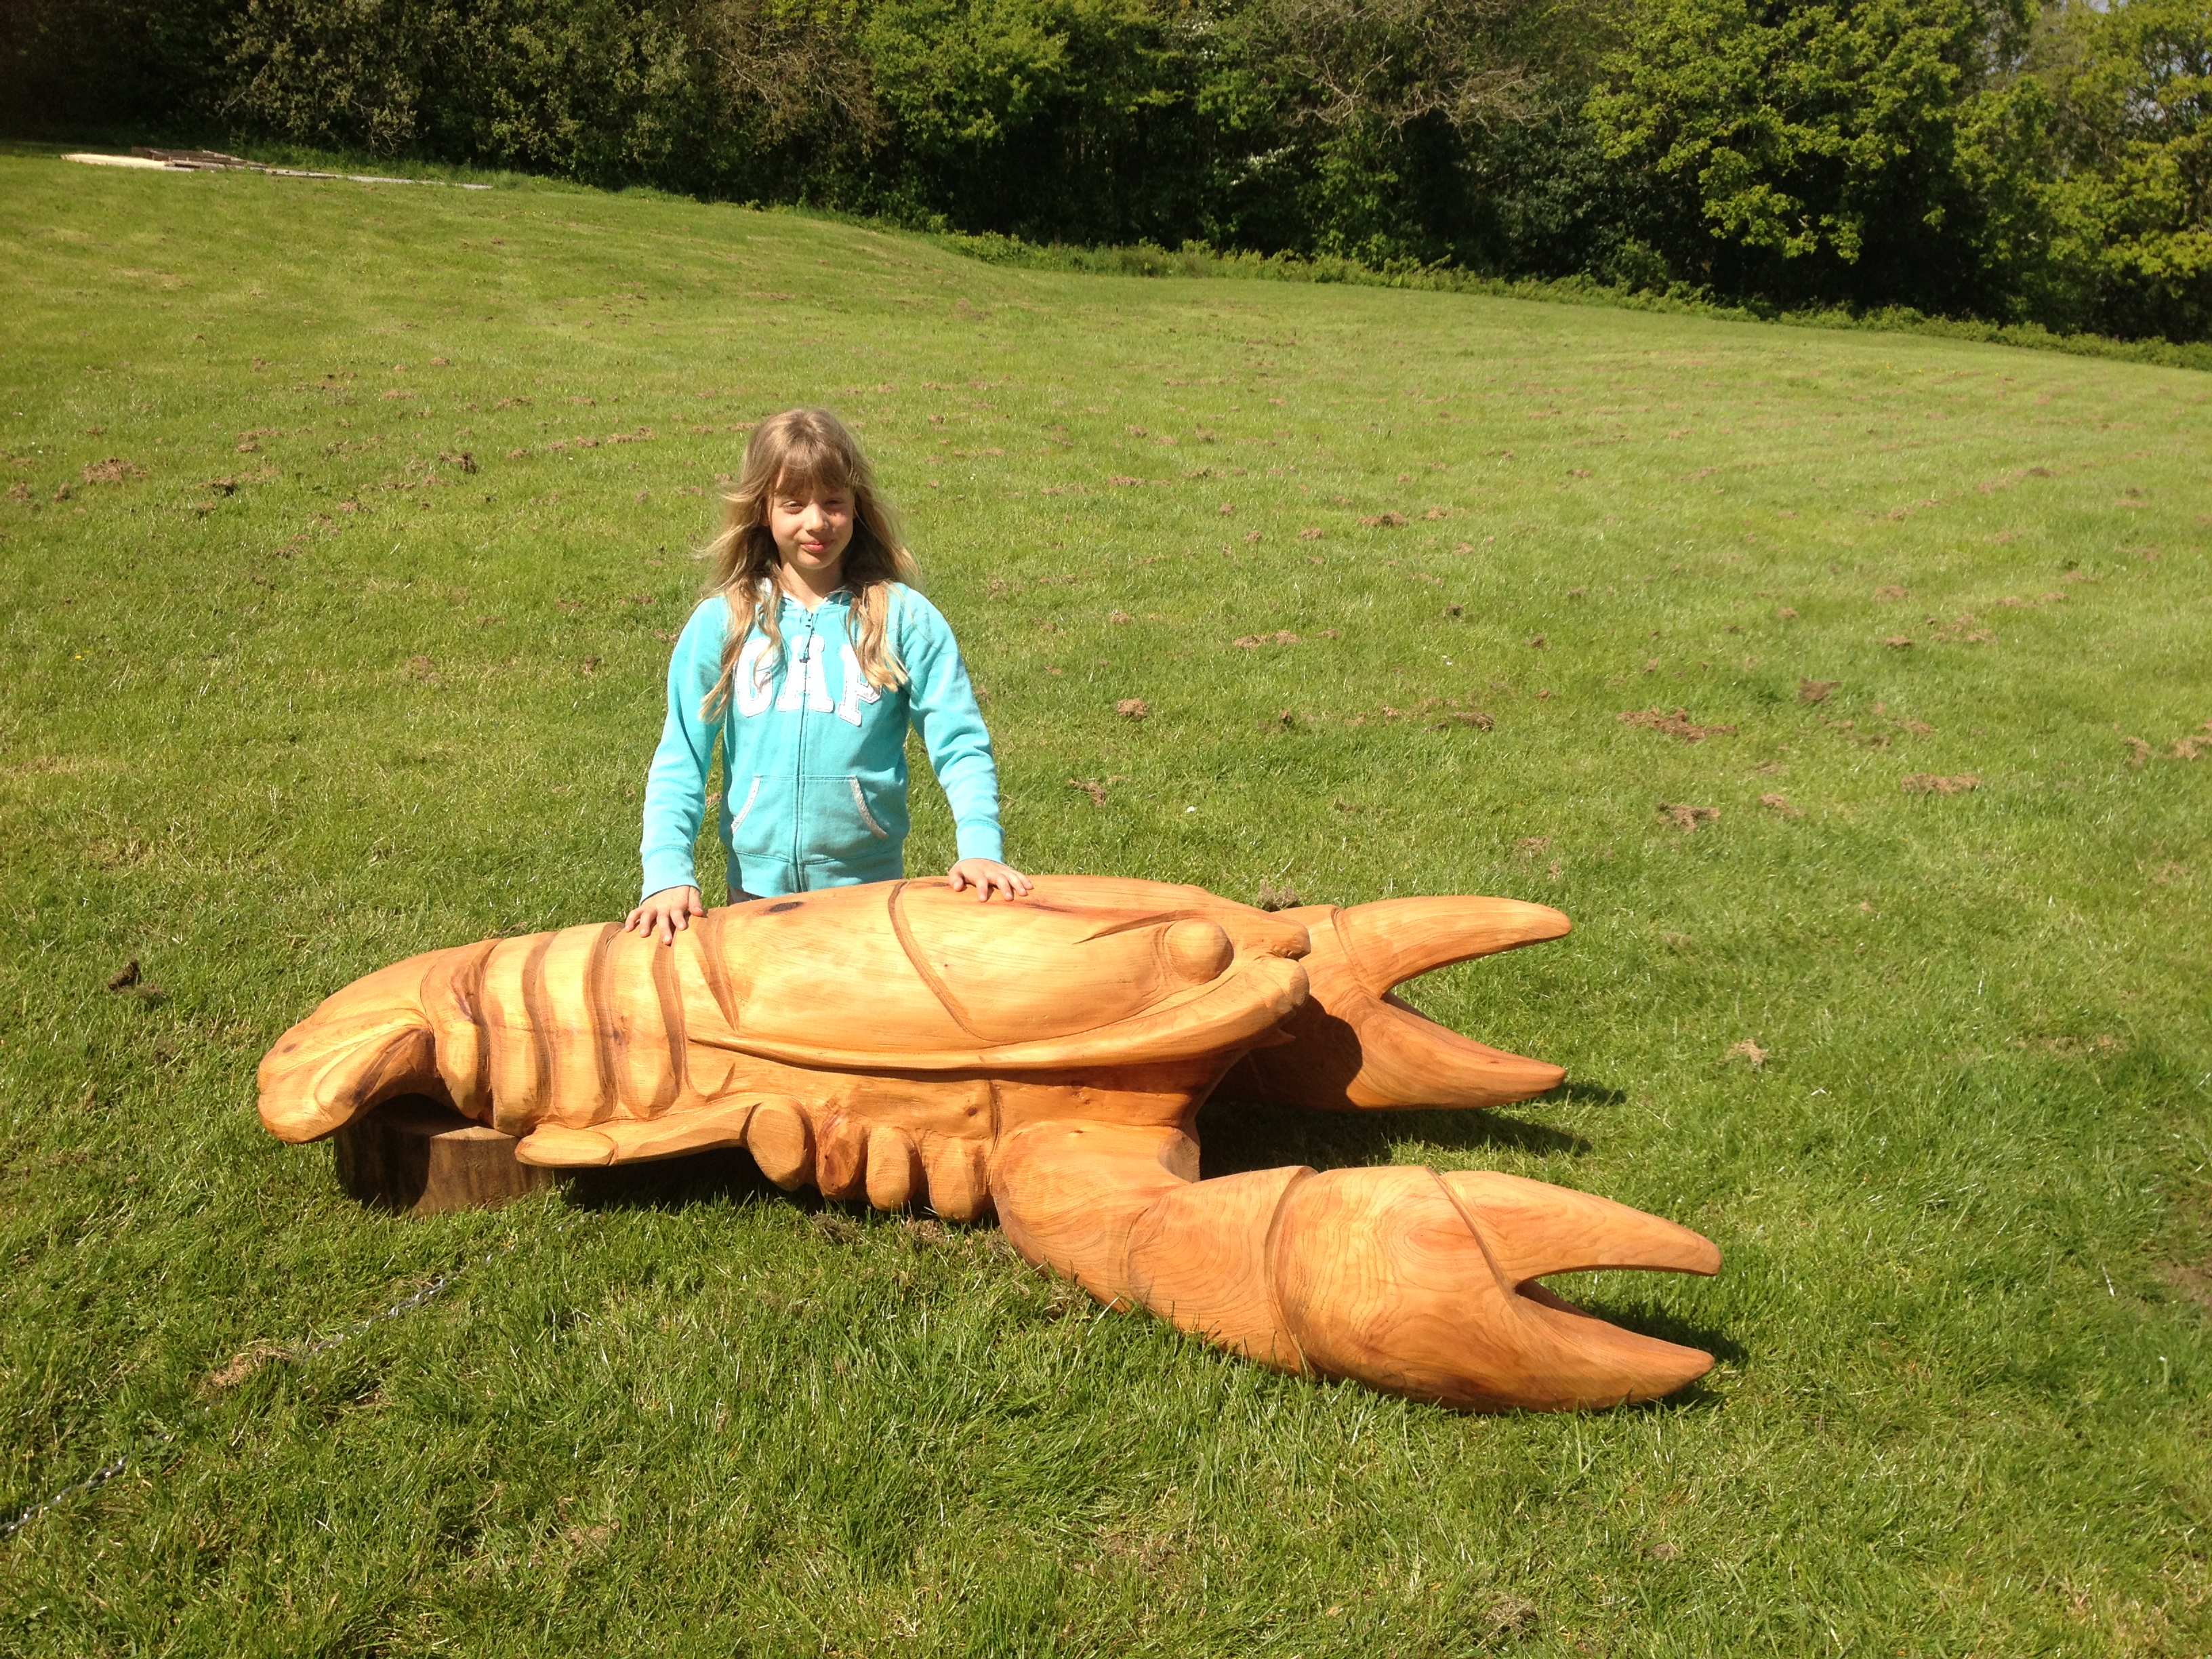 Giant crayfish sculpture installed at Roadford reservoir